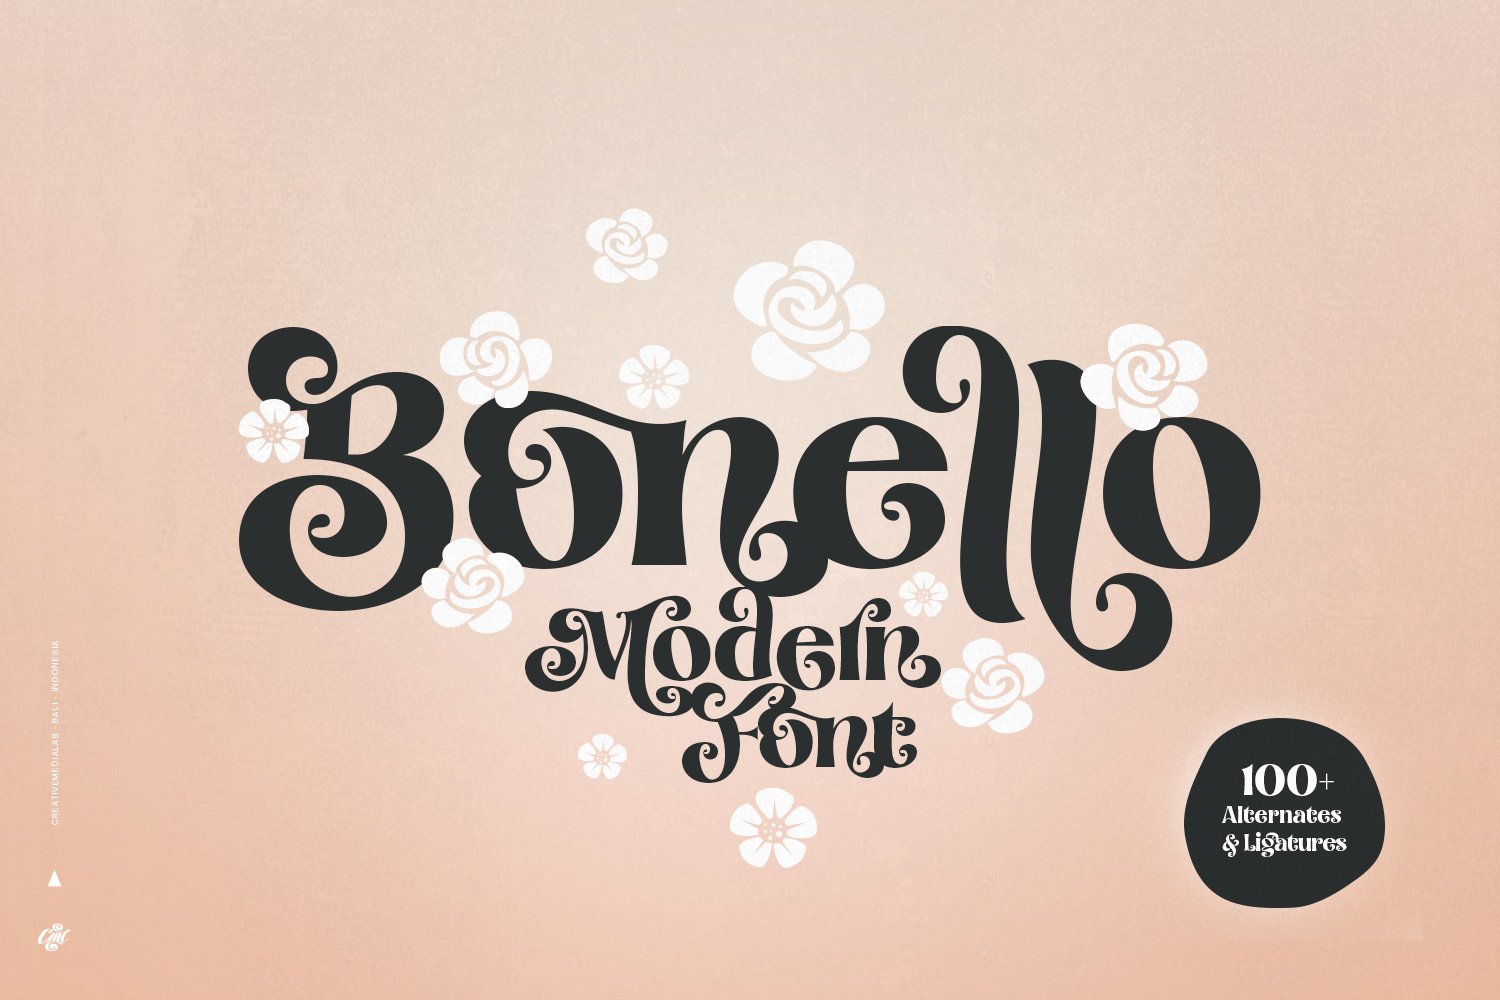 Bonello - Modern Display Font cover image.